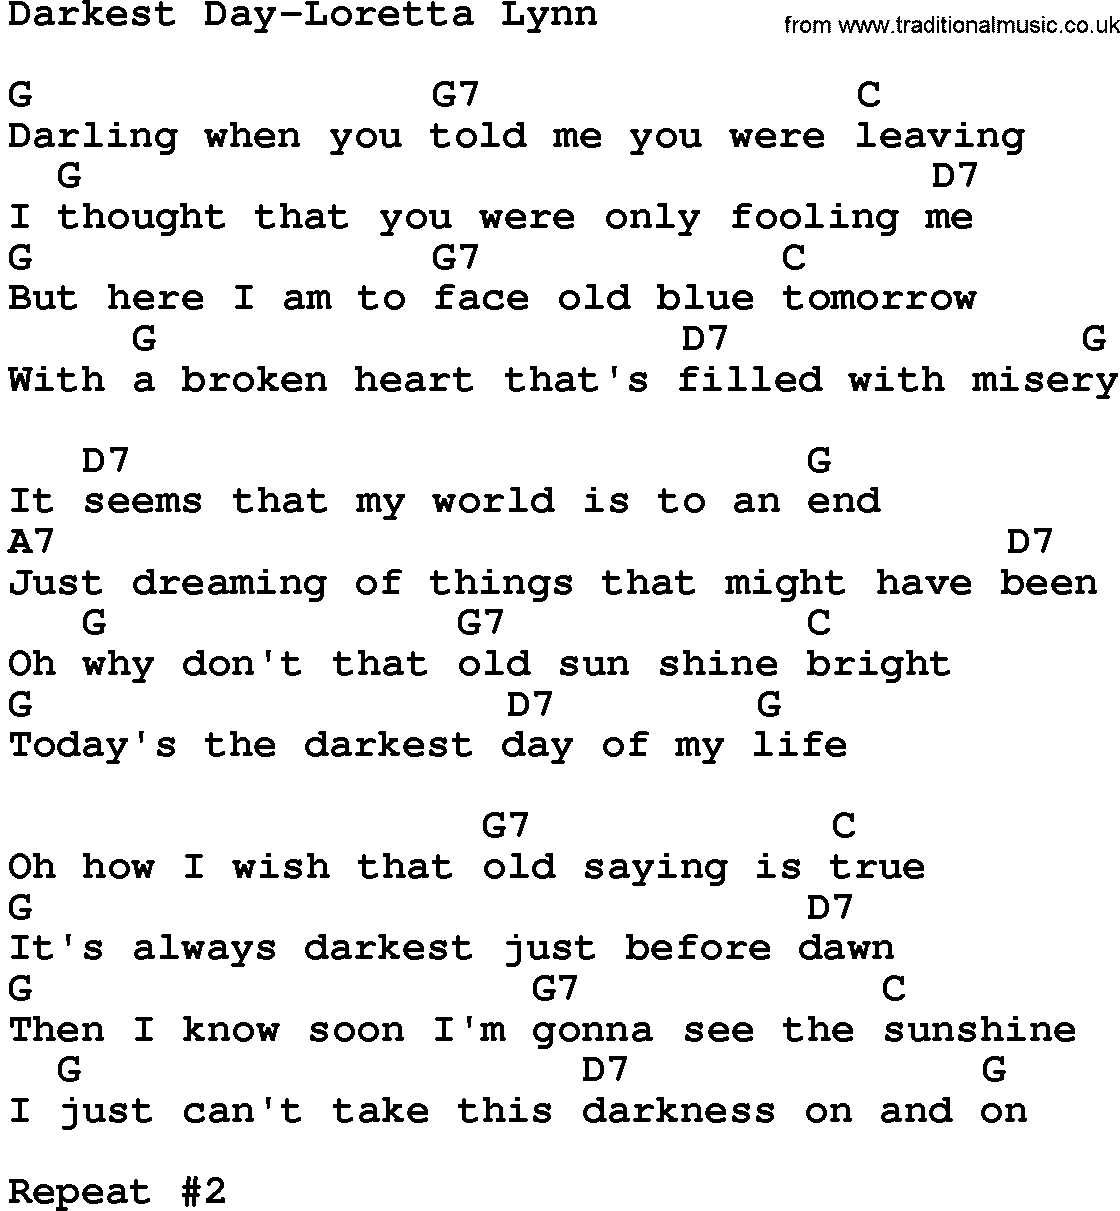 Country music song: Darkest Day-Loretta Lynn lyrics and chords